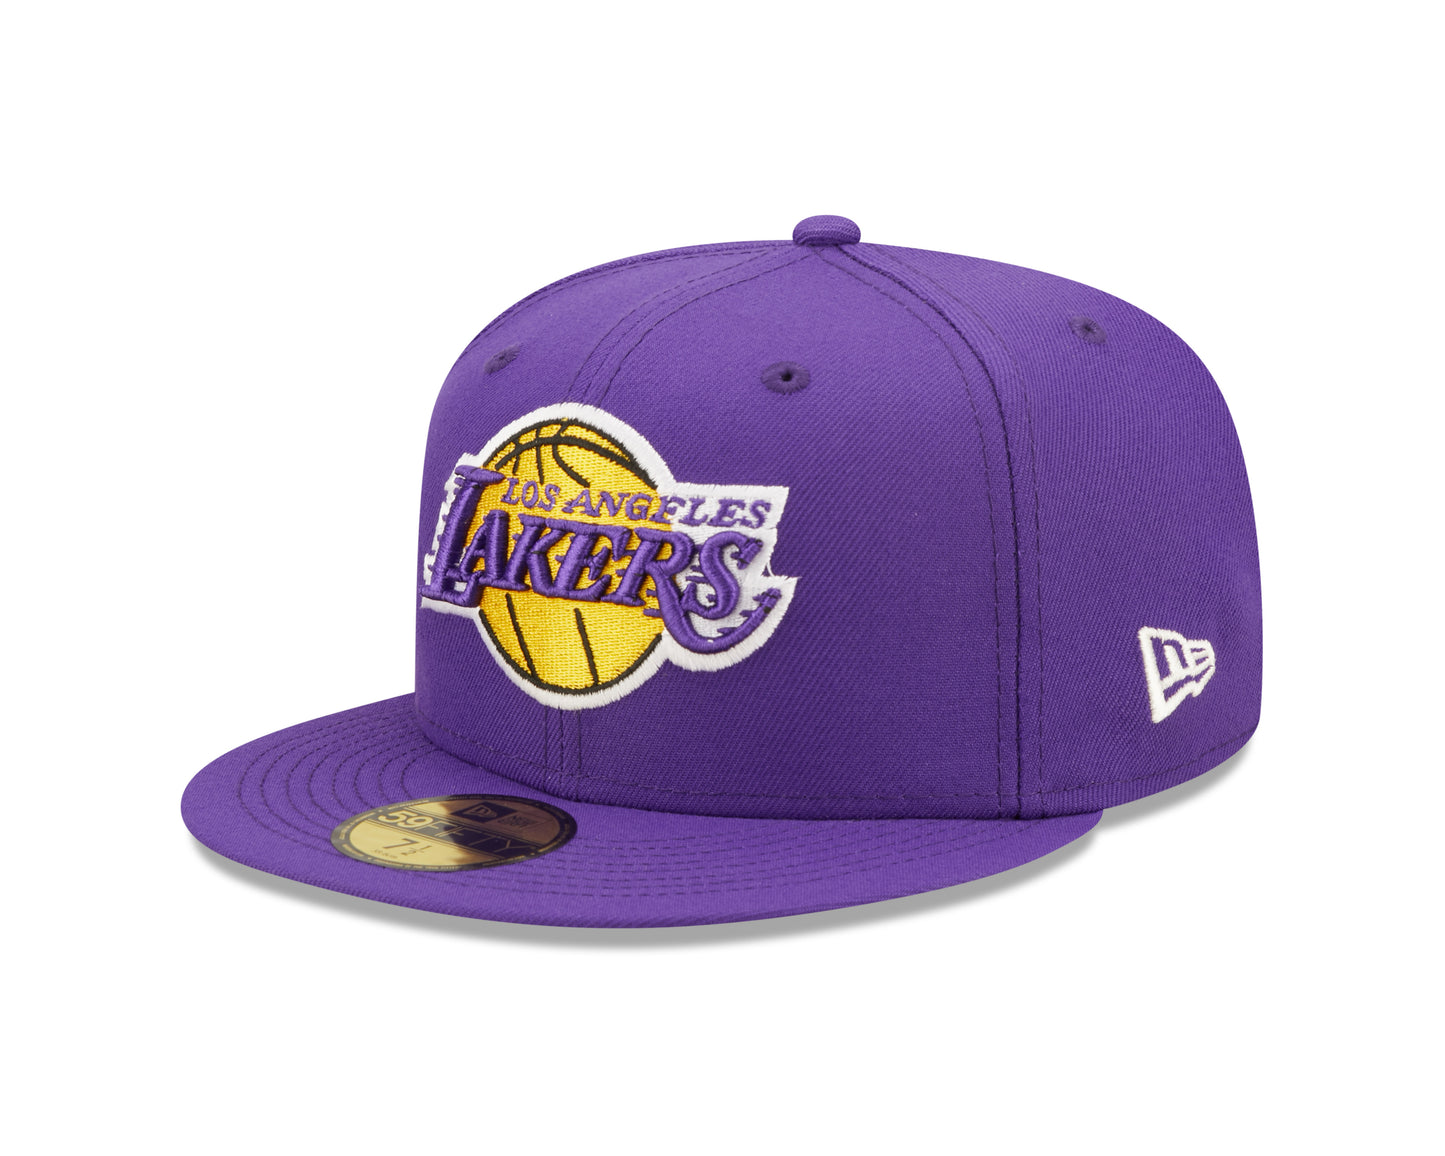 Los Angeles Lakers New Era Pop Sweat Final Champions Commemorative 59fifty Hat